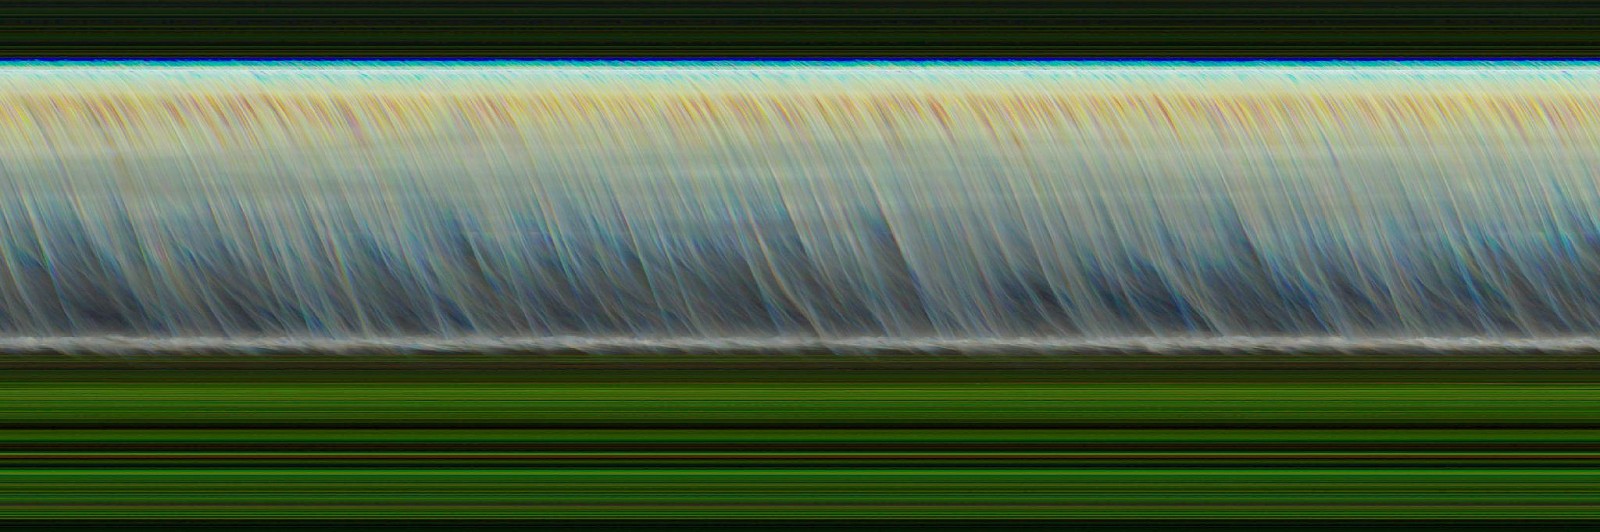 Jay Mark Johnson, AKAKA KASKATA 7, 2010 Akaka Falls HI
archival pigment on paper, mounted on aluminum, 40 x 120 in. (101.6 x 304.8 cm)